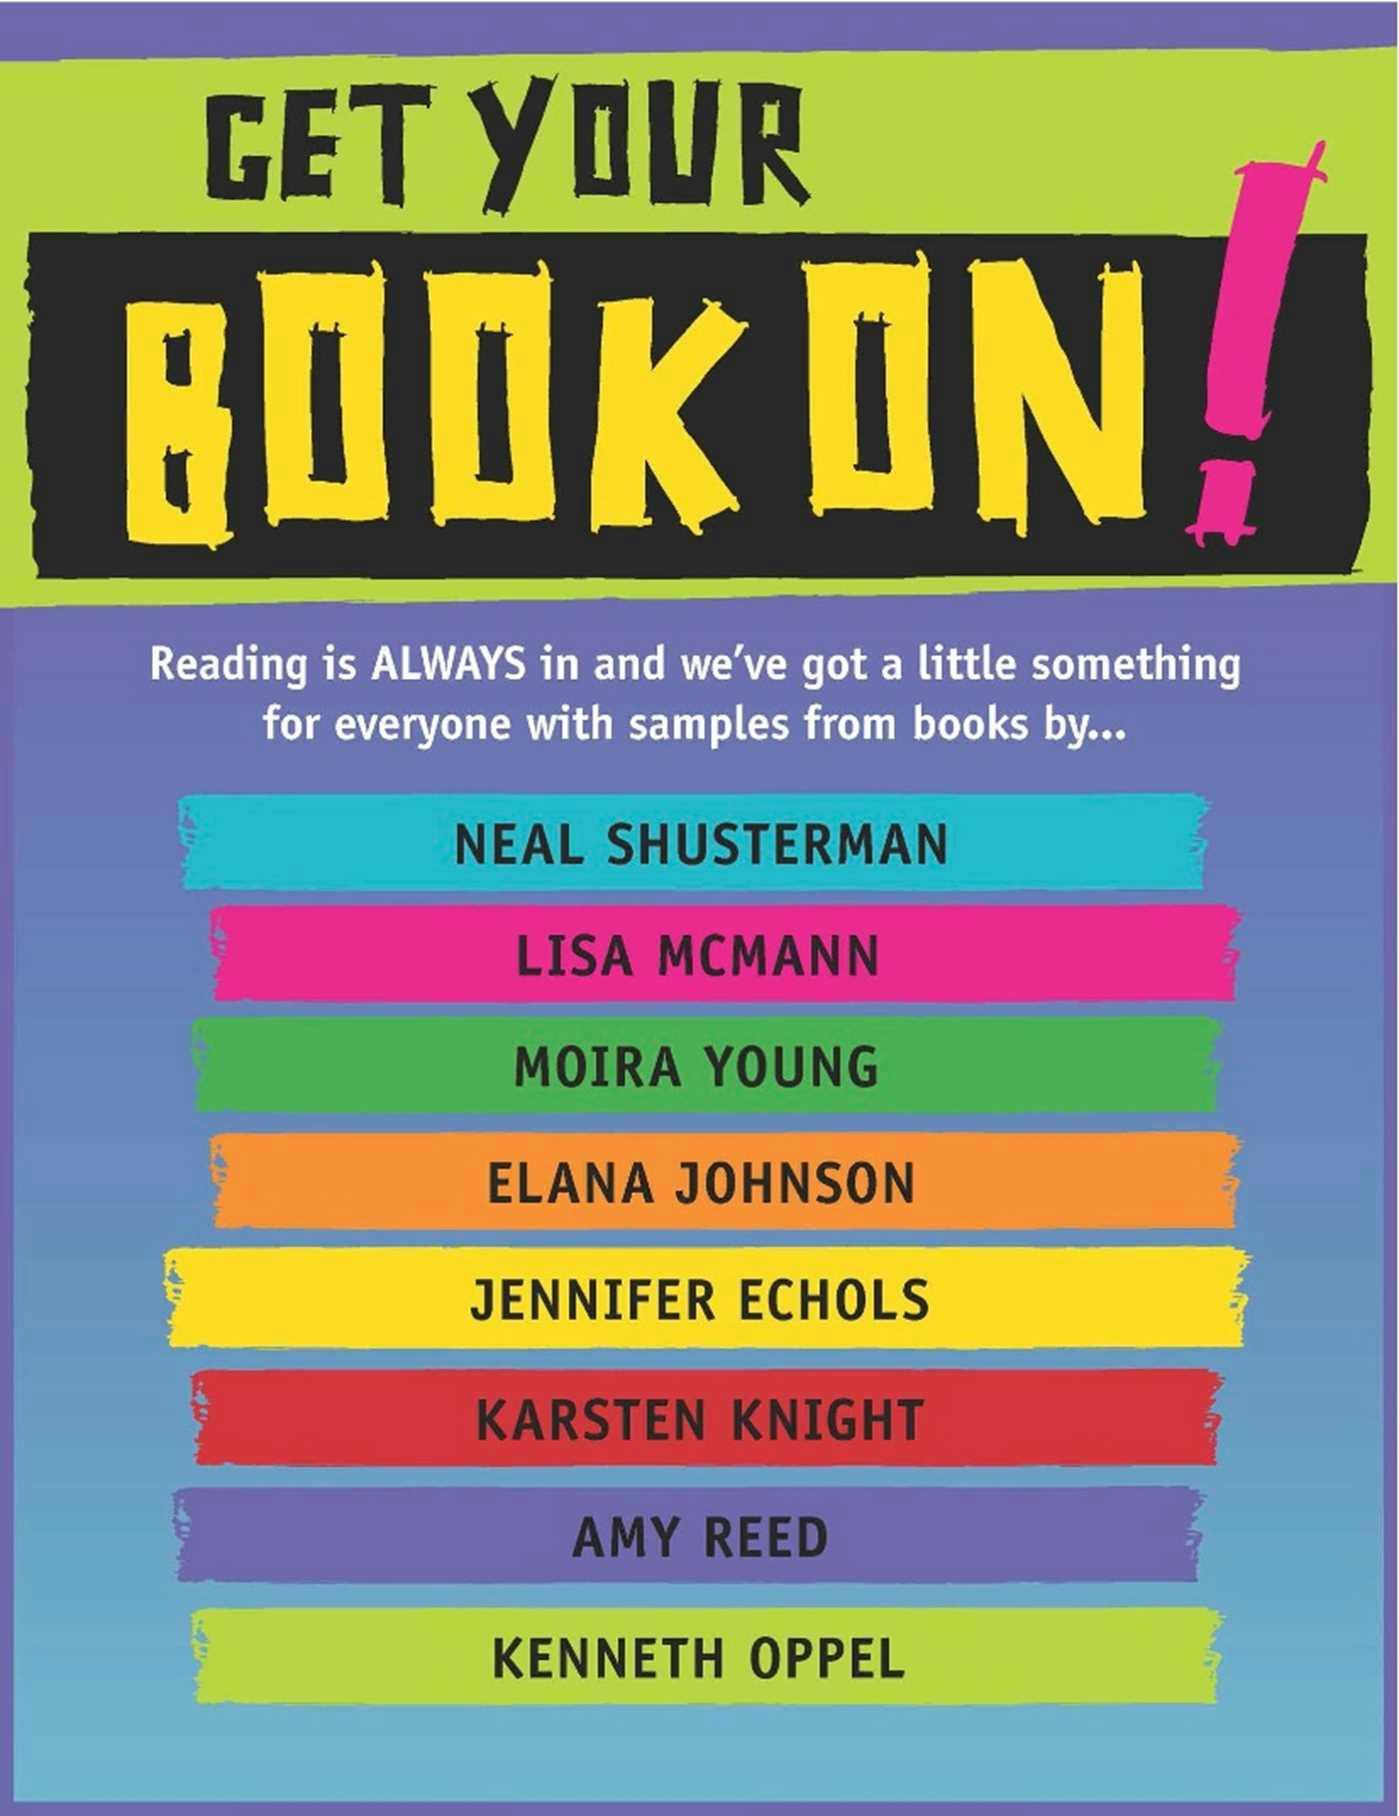 Get Your Book On!: Free Teen eSampler - Kenneth Oppel, Amy Reed, Elana Johnson, Moira Young, Karsten Knight, Lisa McMann, Neal Shusterman, Jennifer Echols